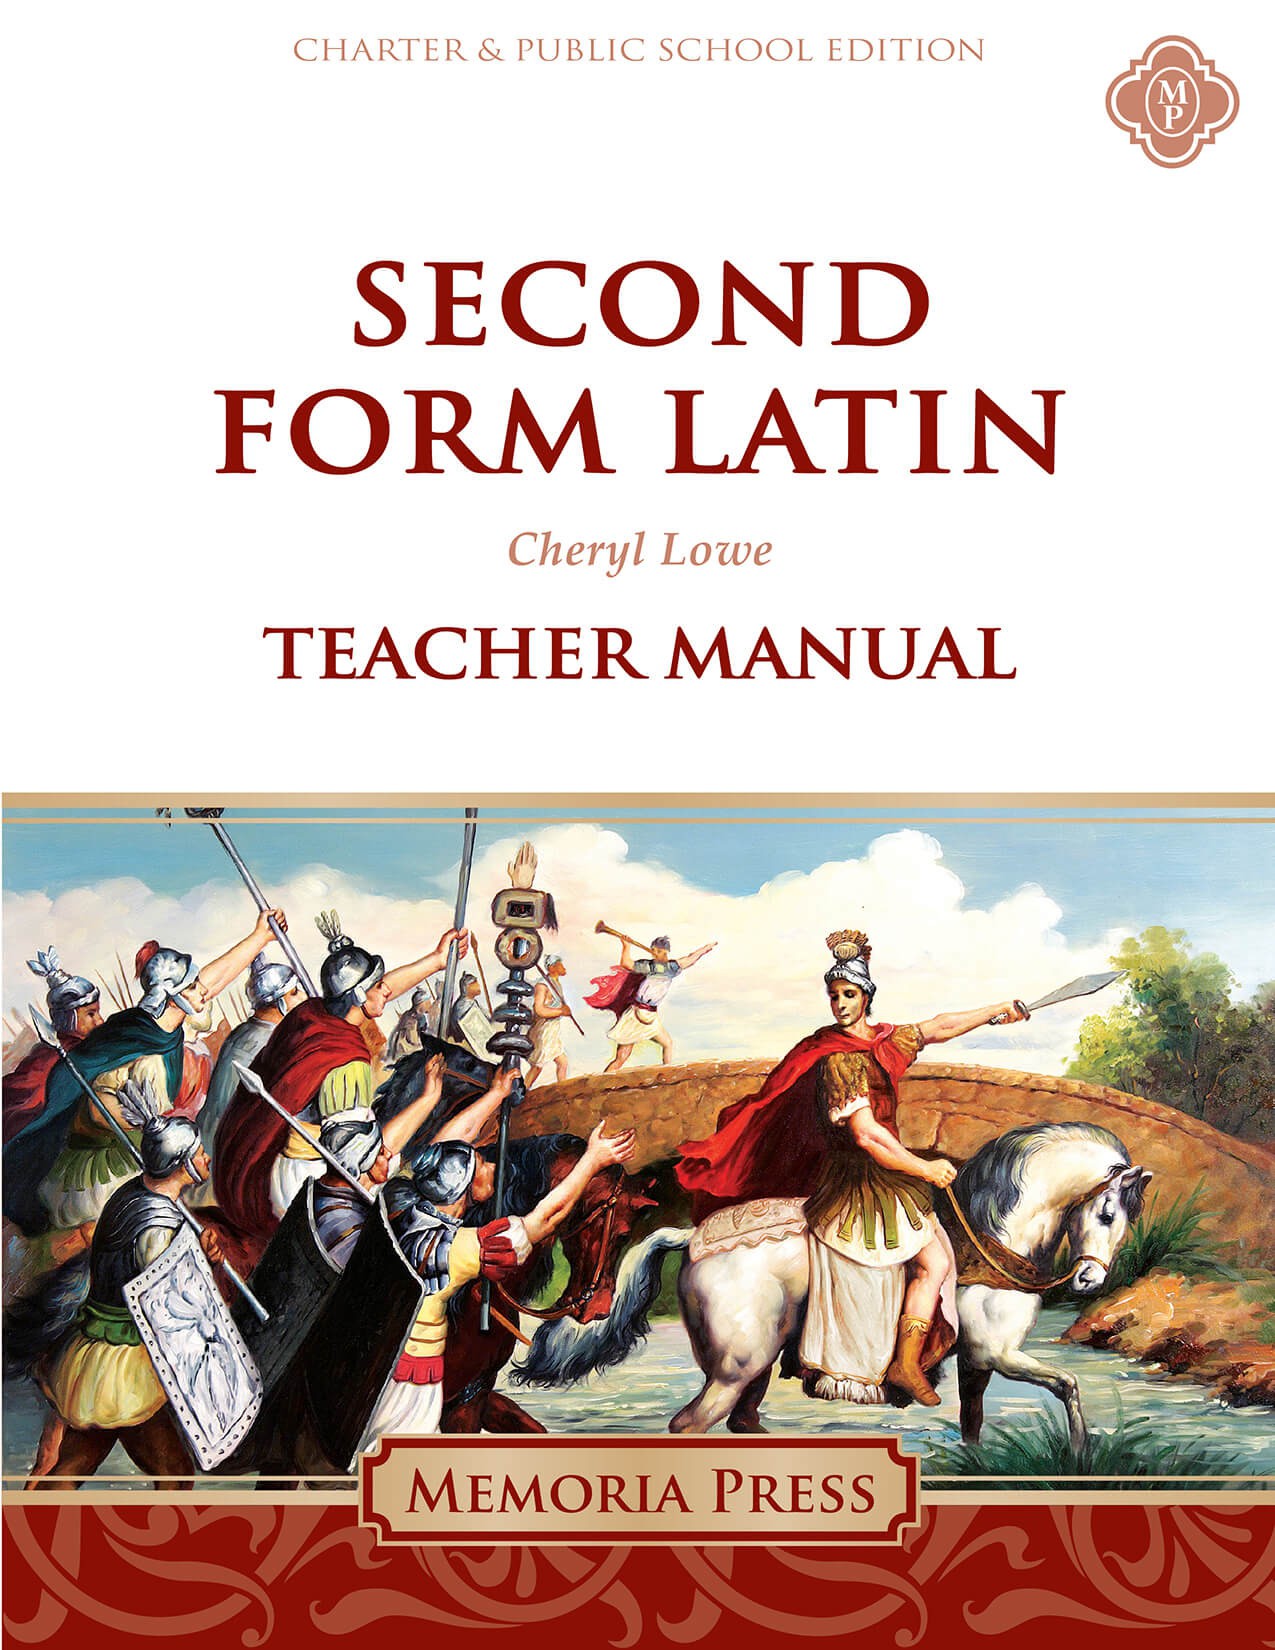 Second Form Latin Teacher Manual-Charter/ Public Edition